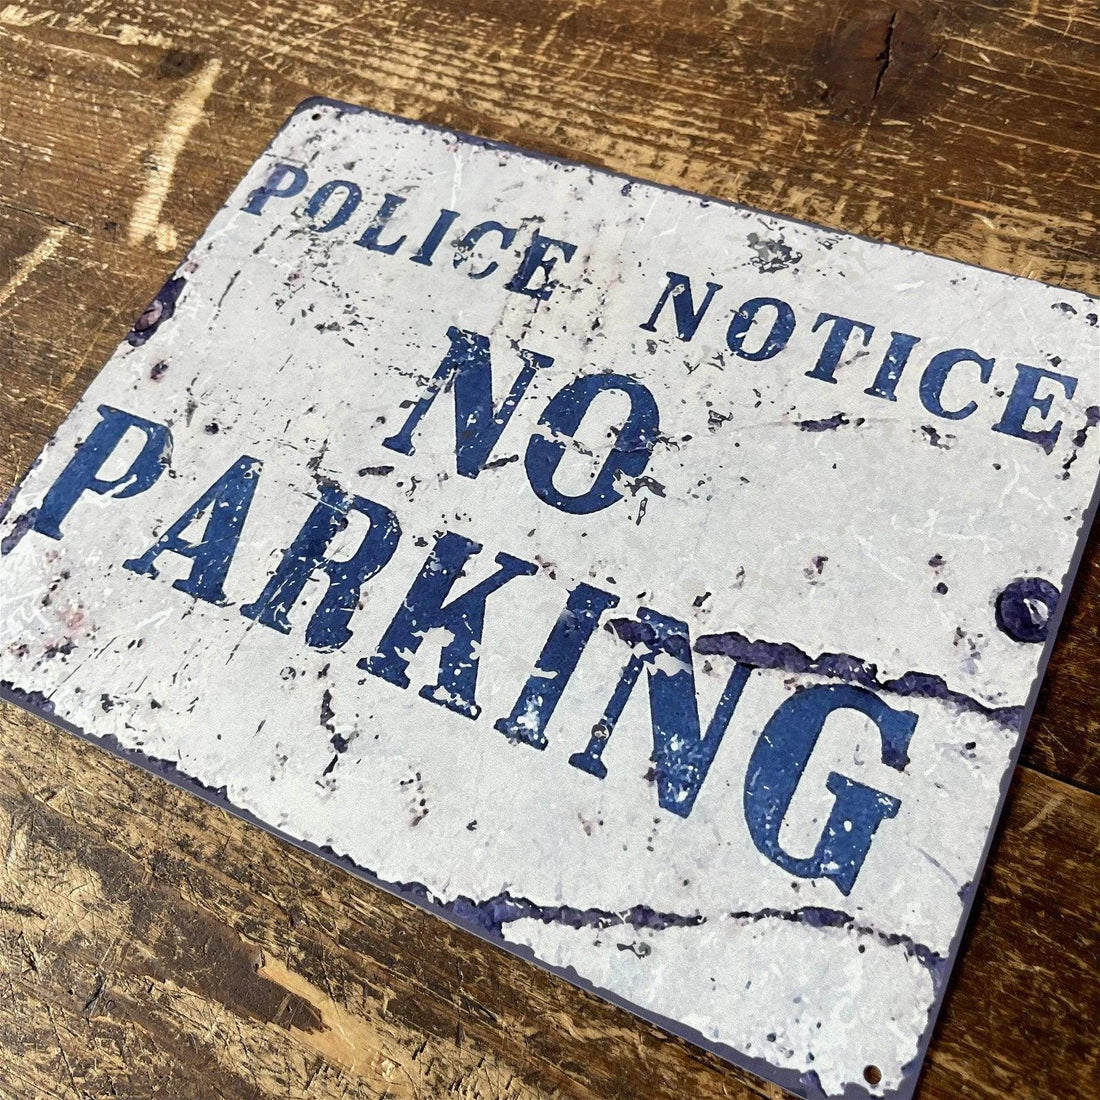 Vintage Metal Sign - Police Notice No Parking - £18.99 - Signs & Rules 